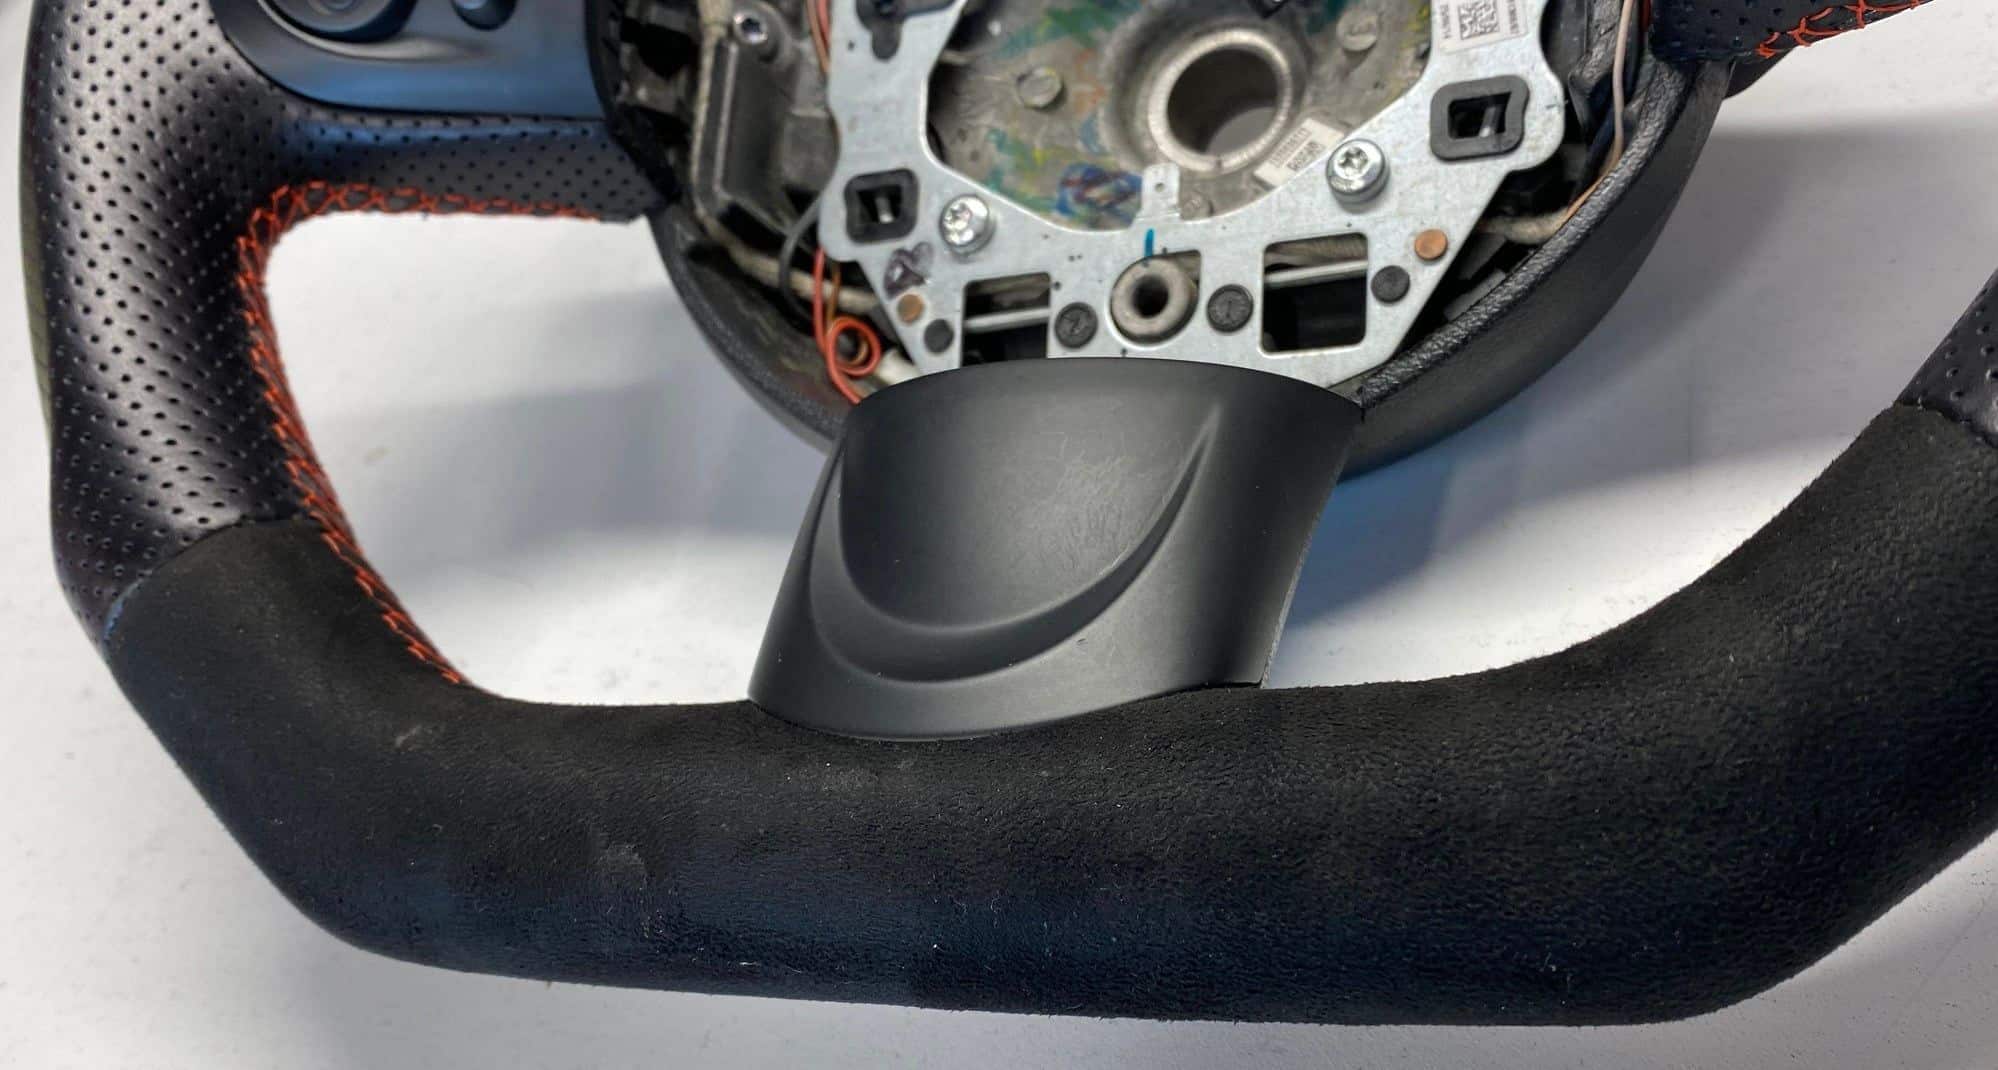 Steering/Suspension - Custom steering wheel for the R55, R56, R57, R58, R59, R60, R61 Mini Cooper - Used - 2007 to 2014 Mini All Models - San Leandro, CA 94577, United States